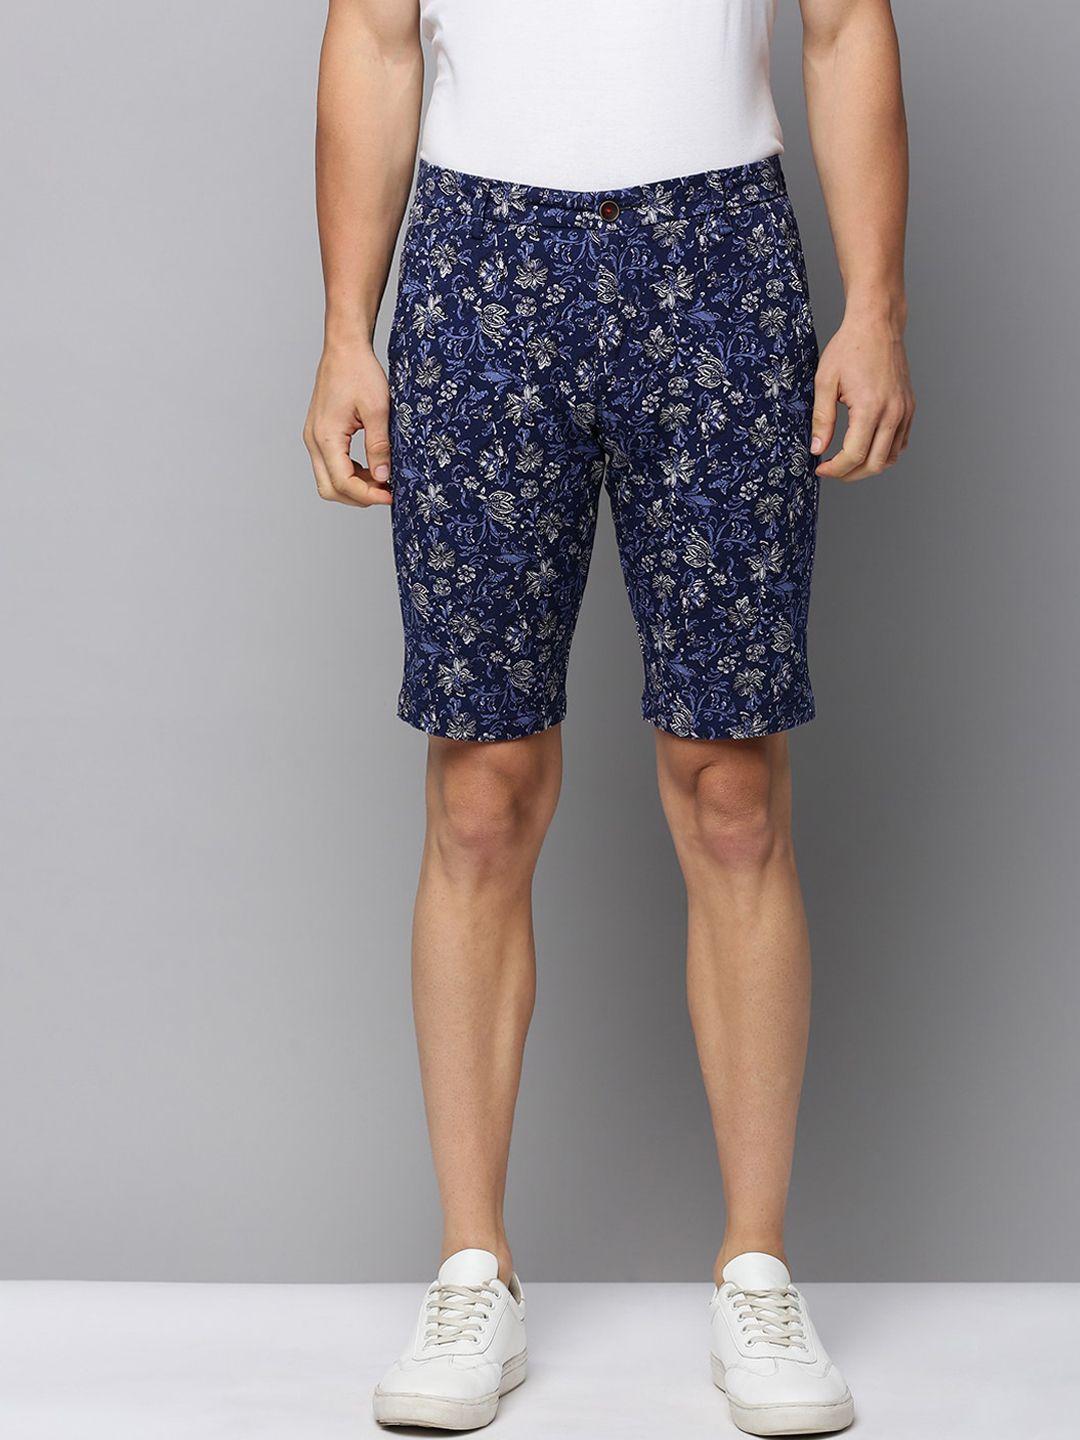 showoff-men-floral-printed-cotton-shorts